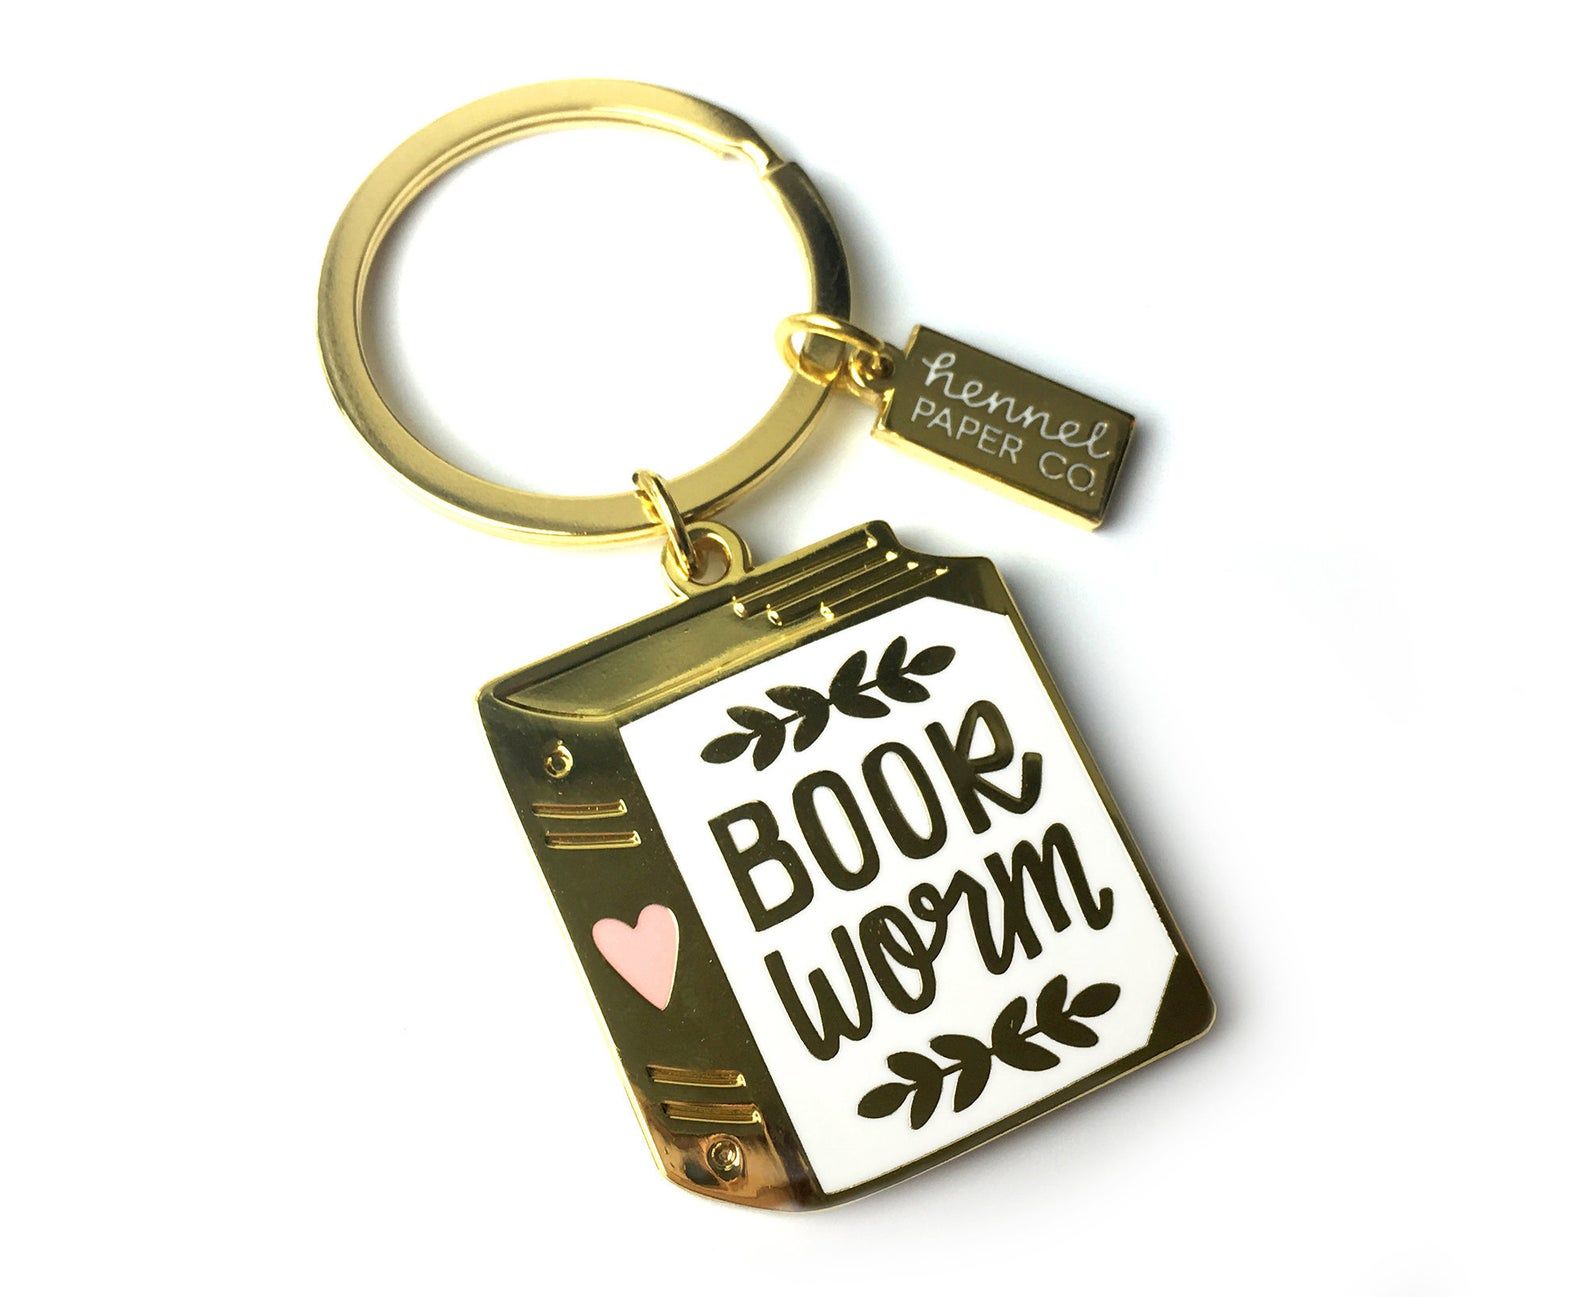 Bookworm Keychain